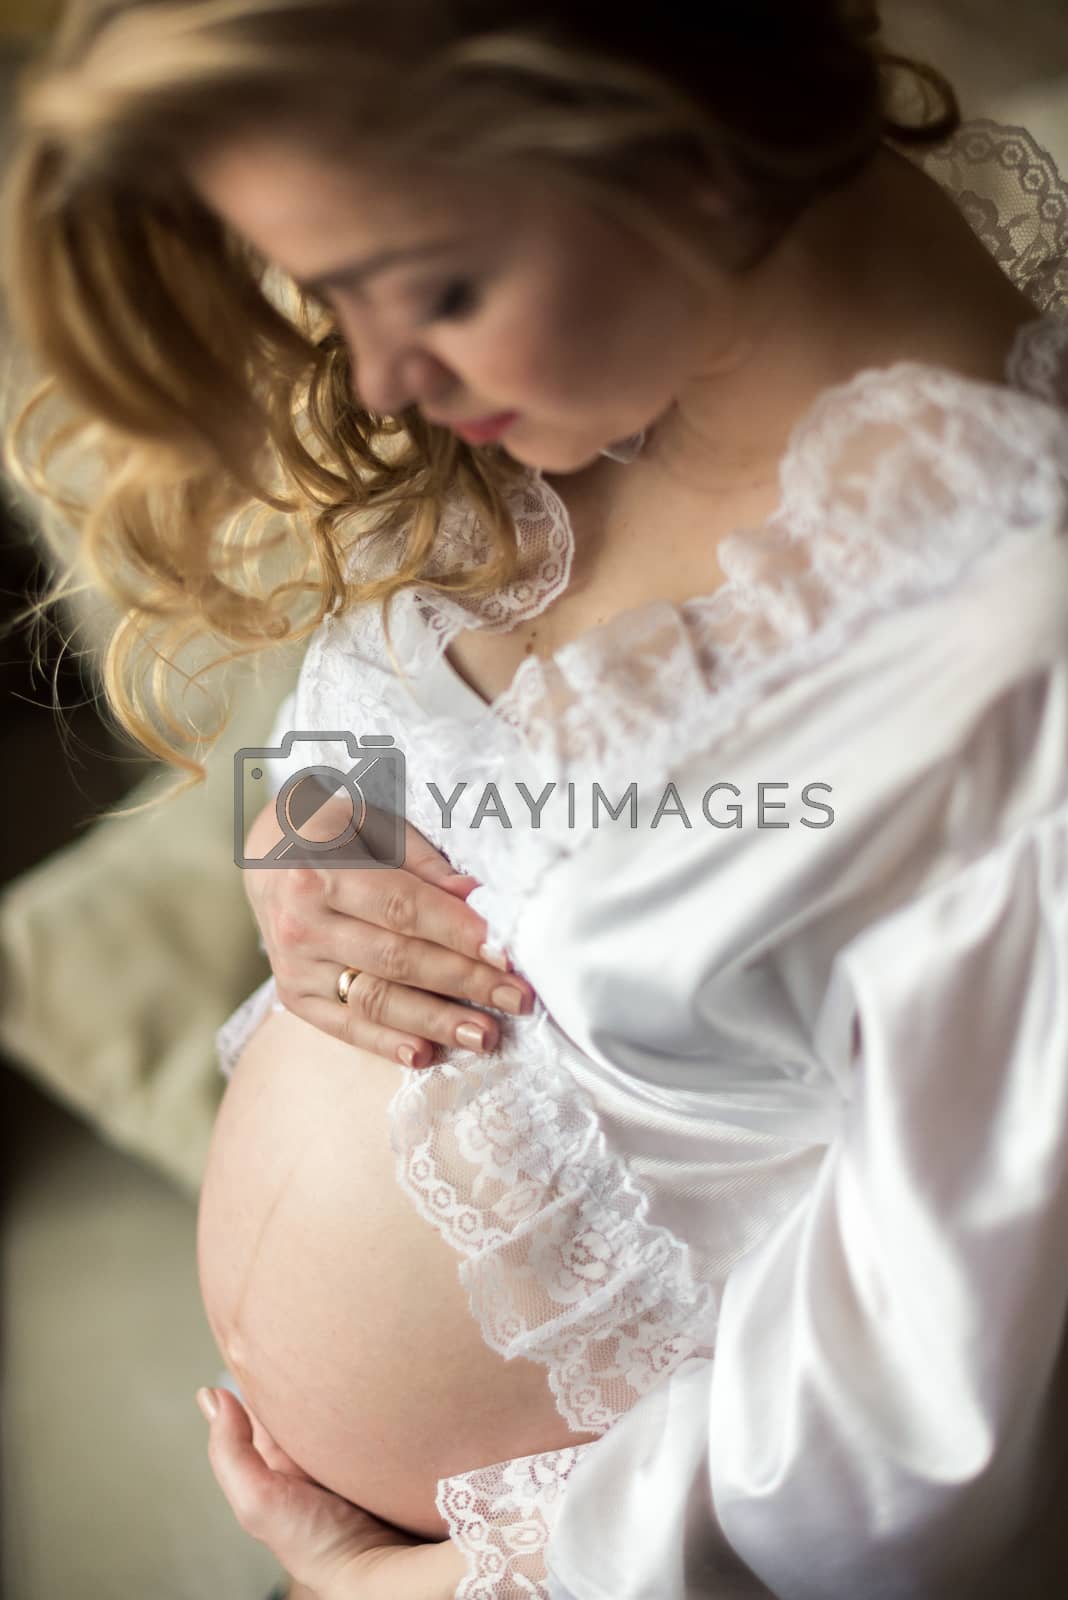 Royalty free image of Portrait of pregnant woman by okskukuruza